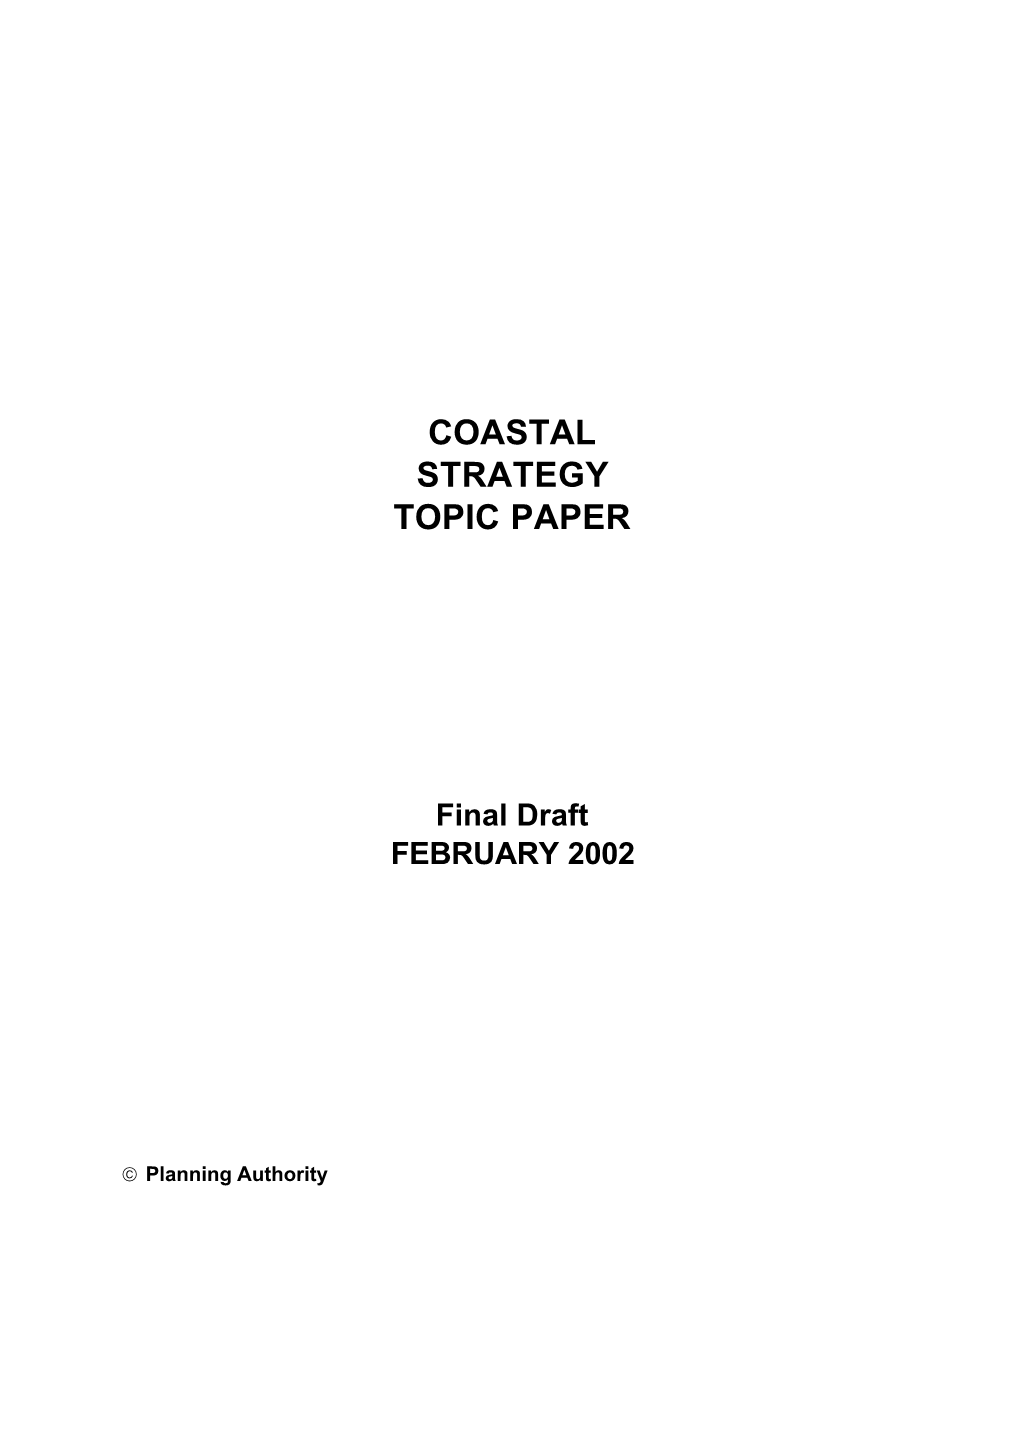 Coastal Strategy Topic Paper